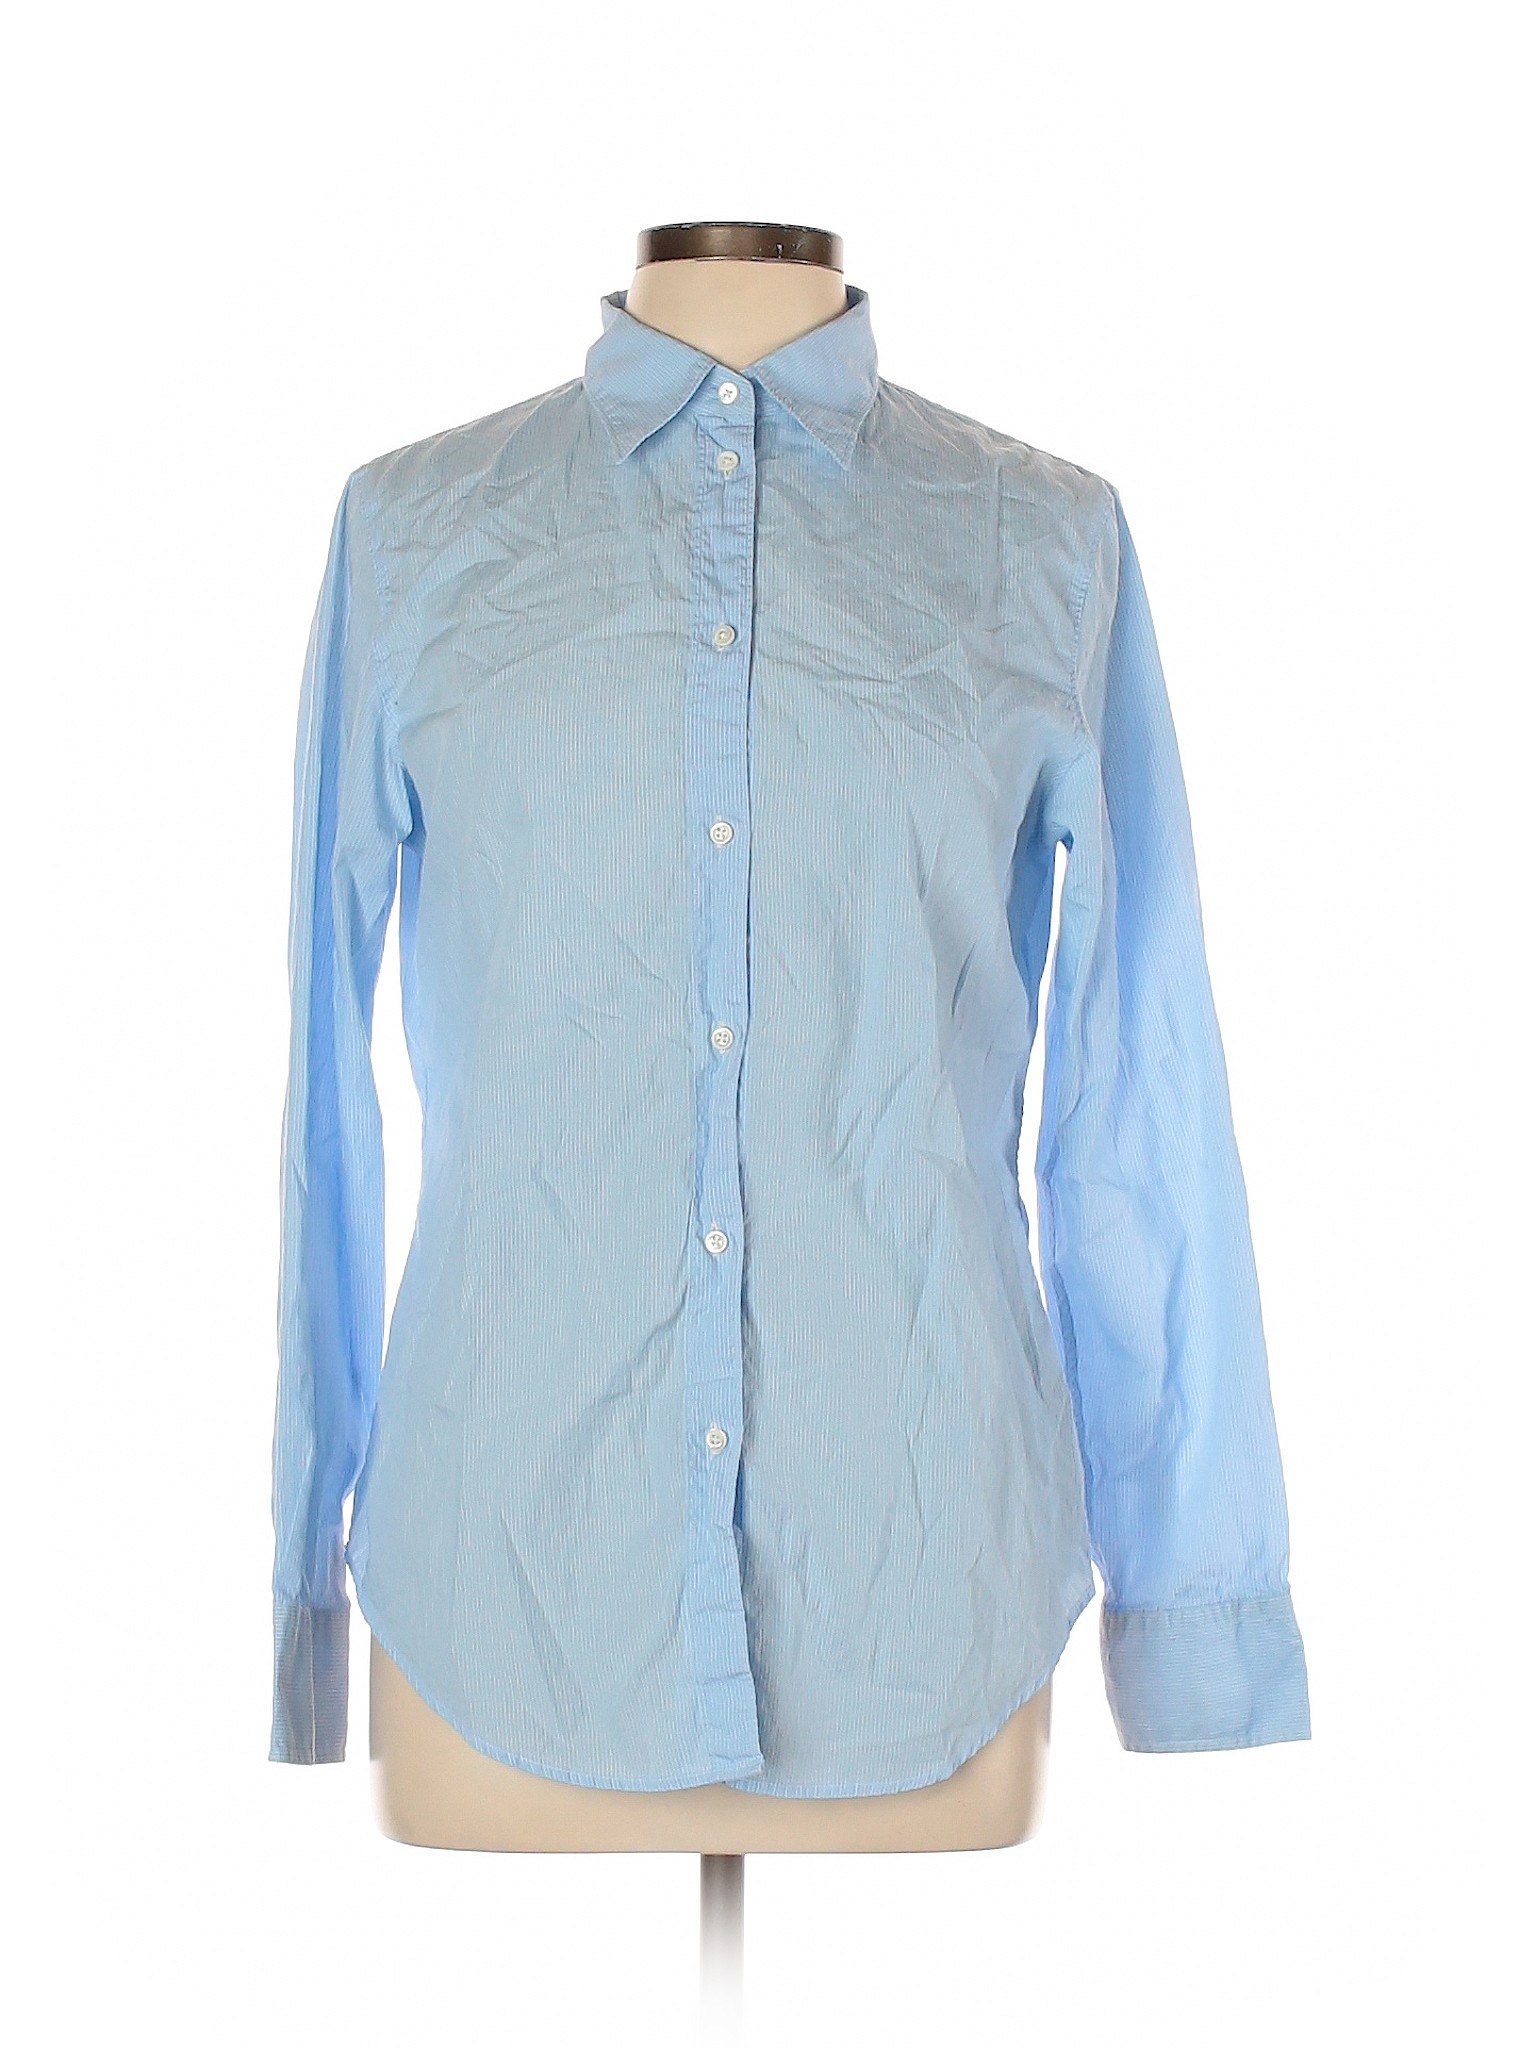 Gap Women Blue Long Sleeve Button-Down Shirt 12 | eBay